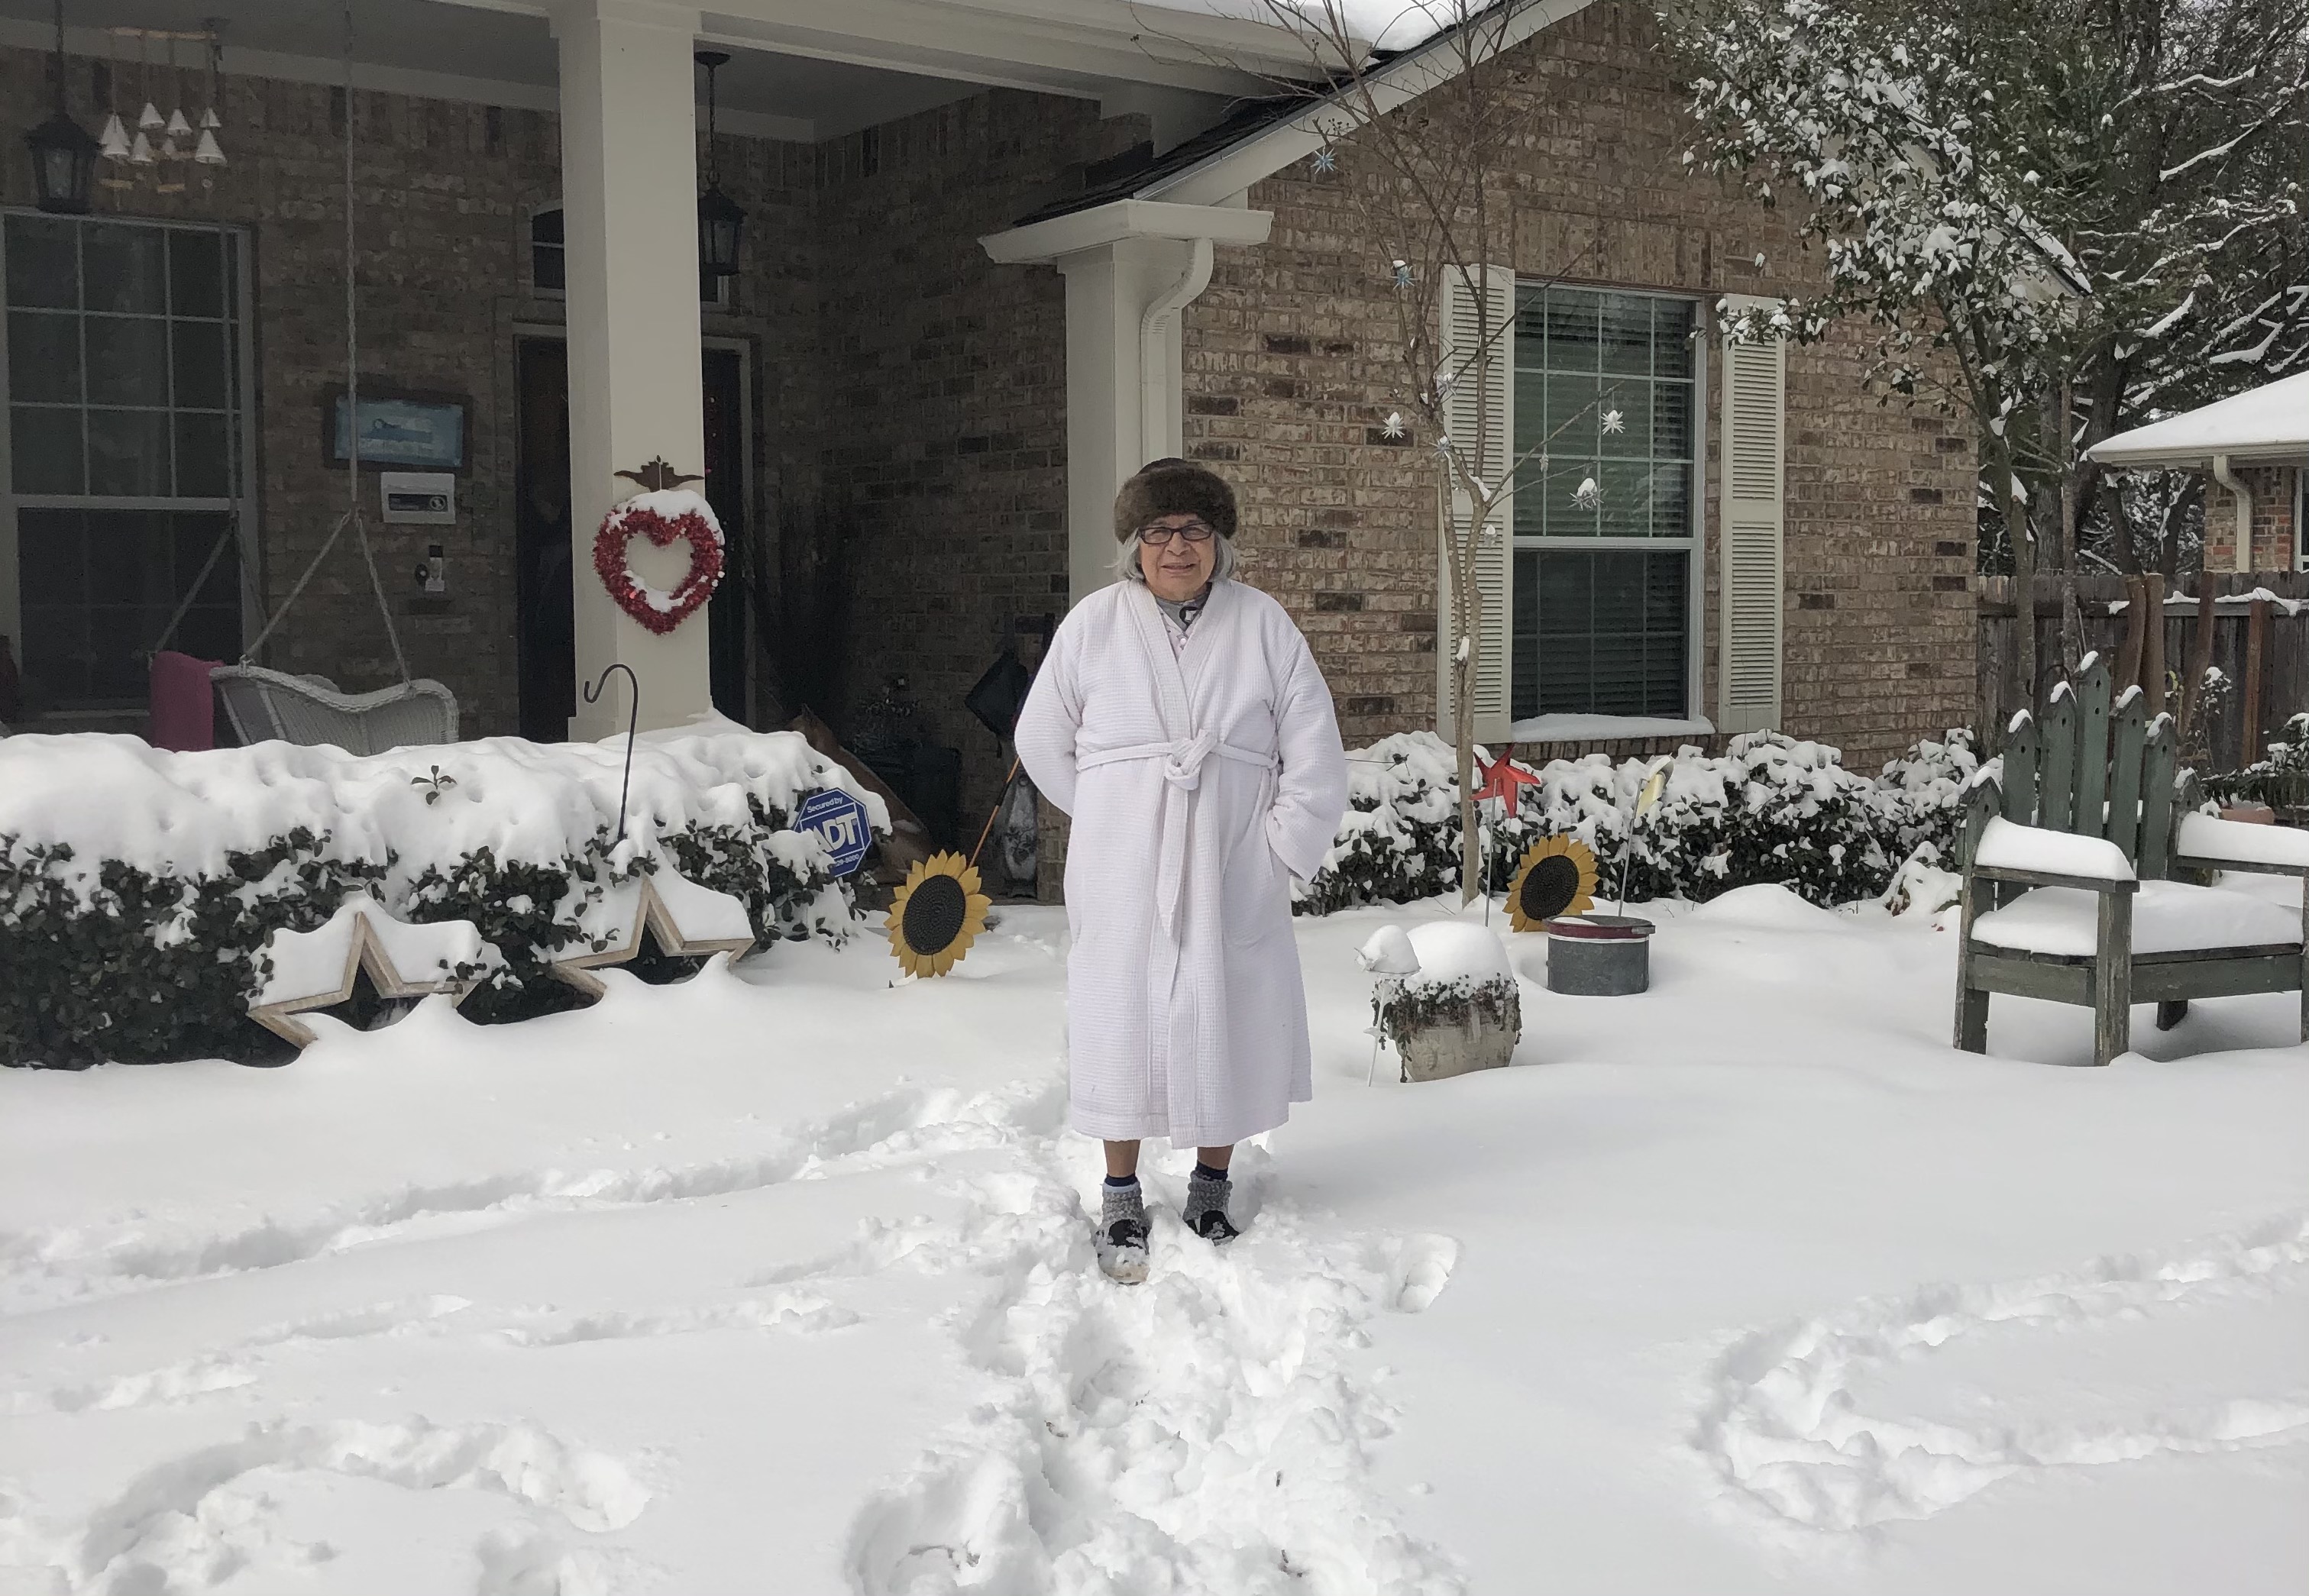 Grandma walking in the snow.